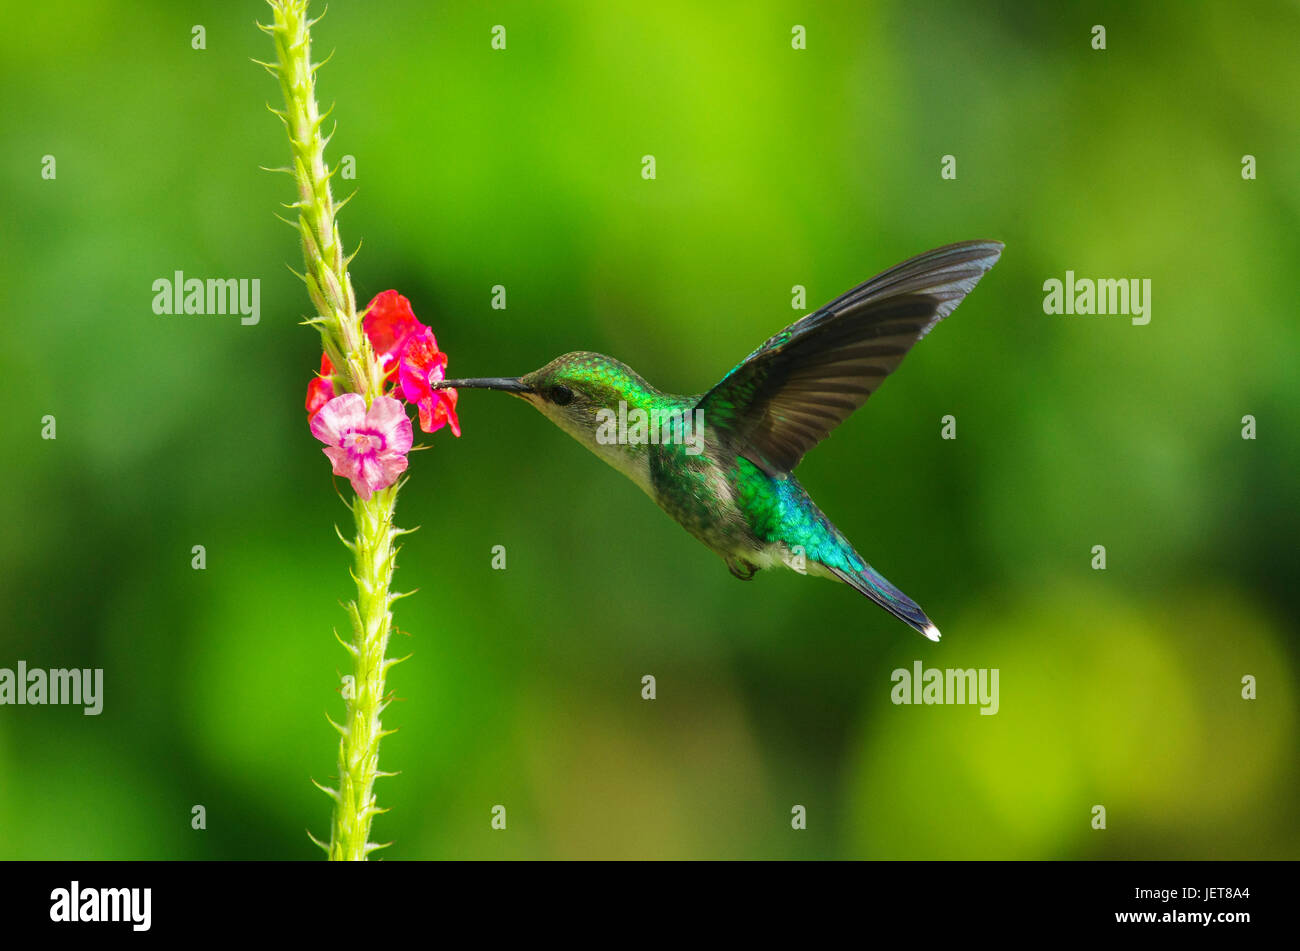 Aves de Panamá - Verde Colibrí alimentándose de una flor Foto de stock